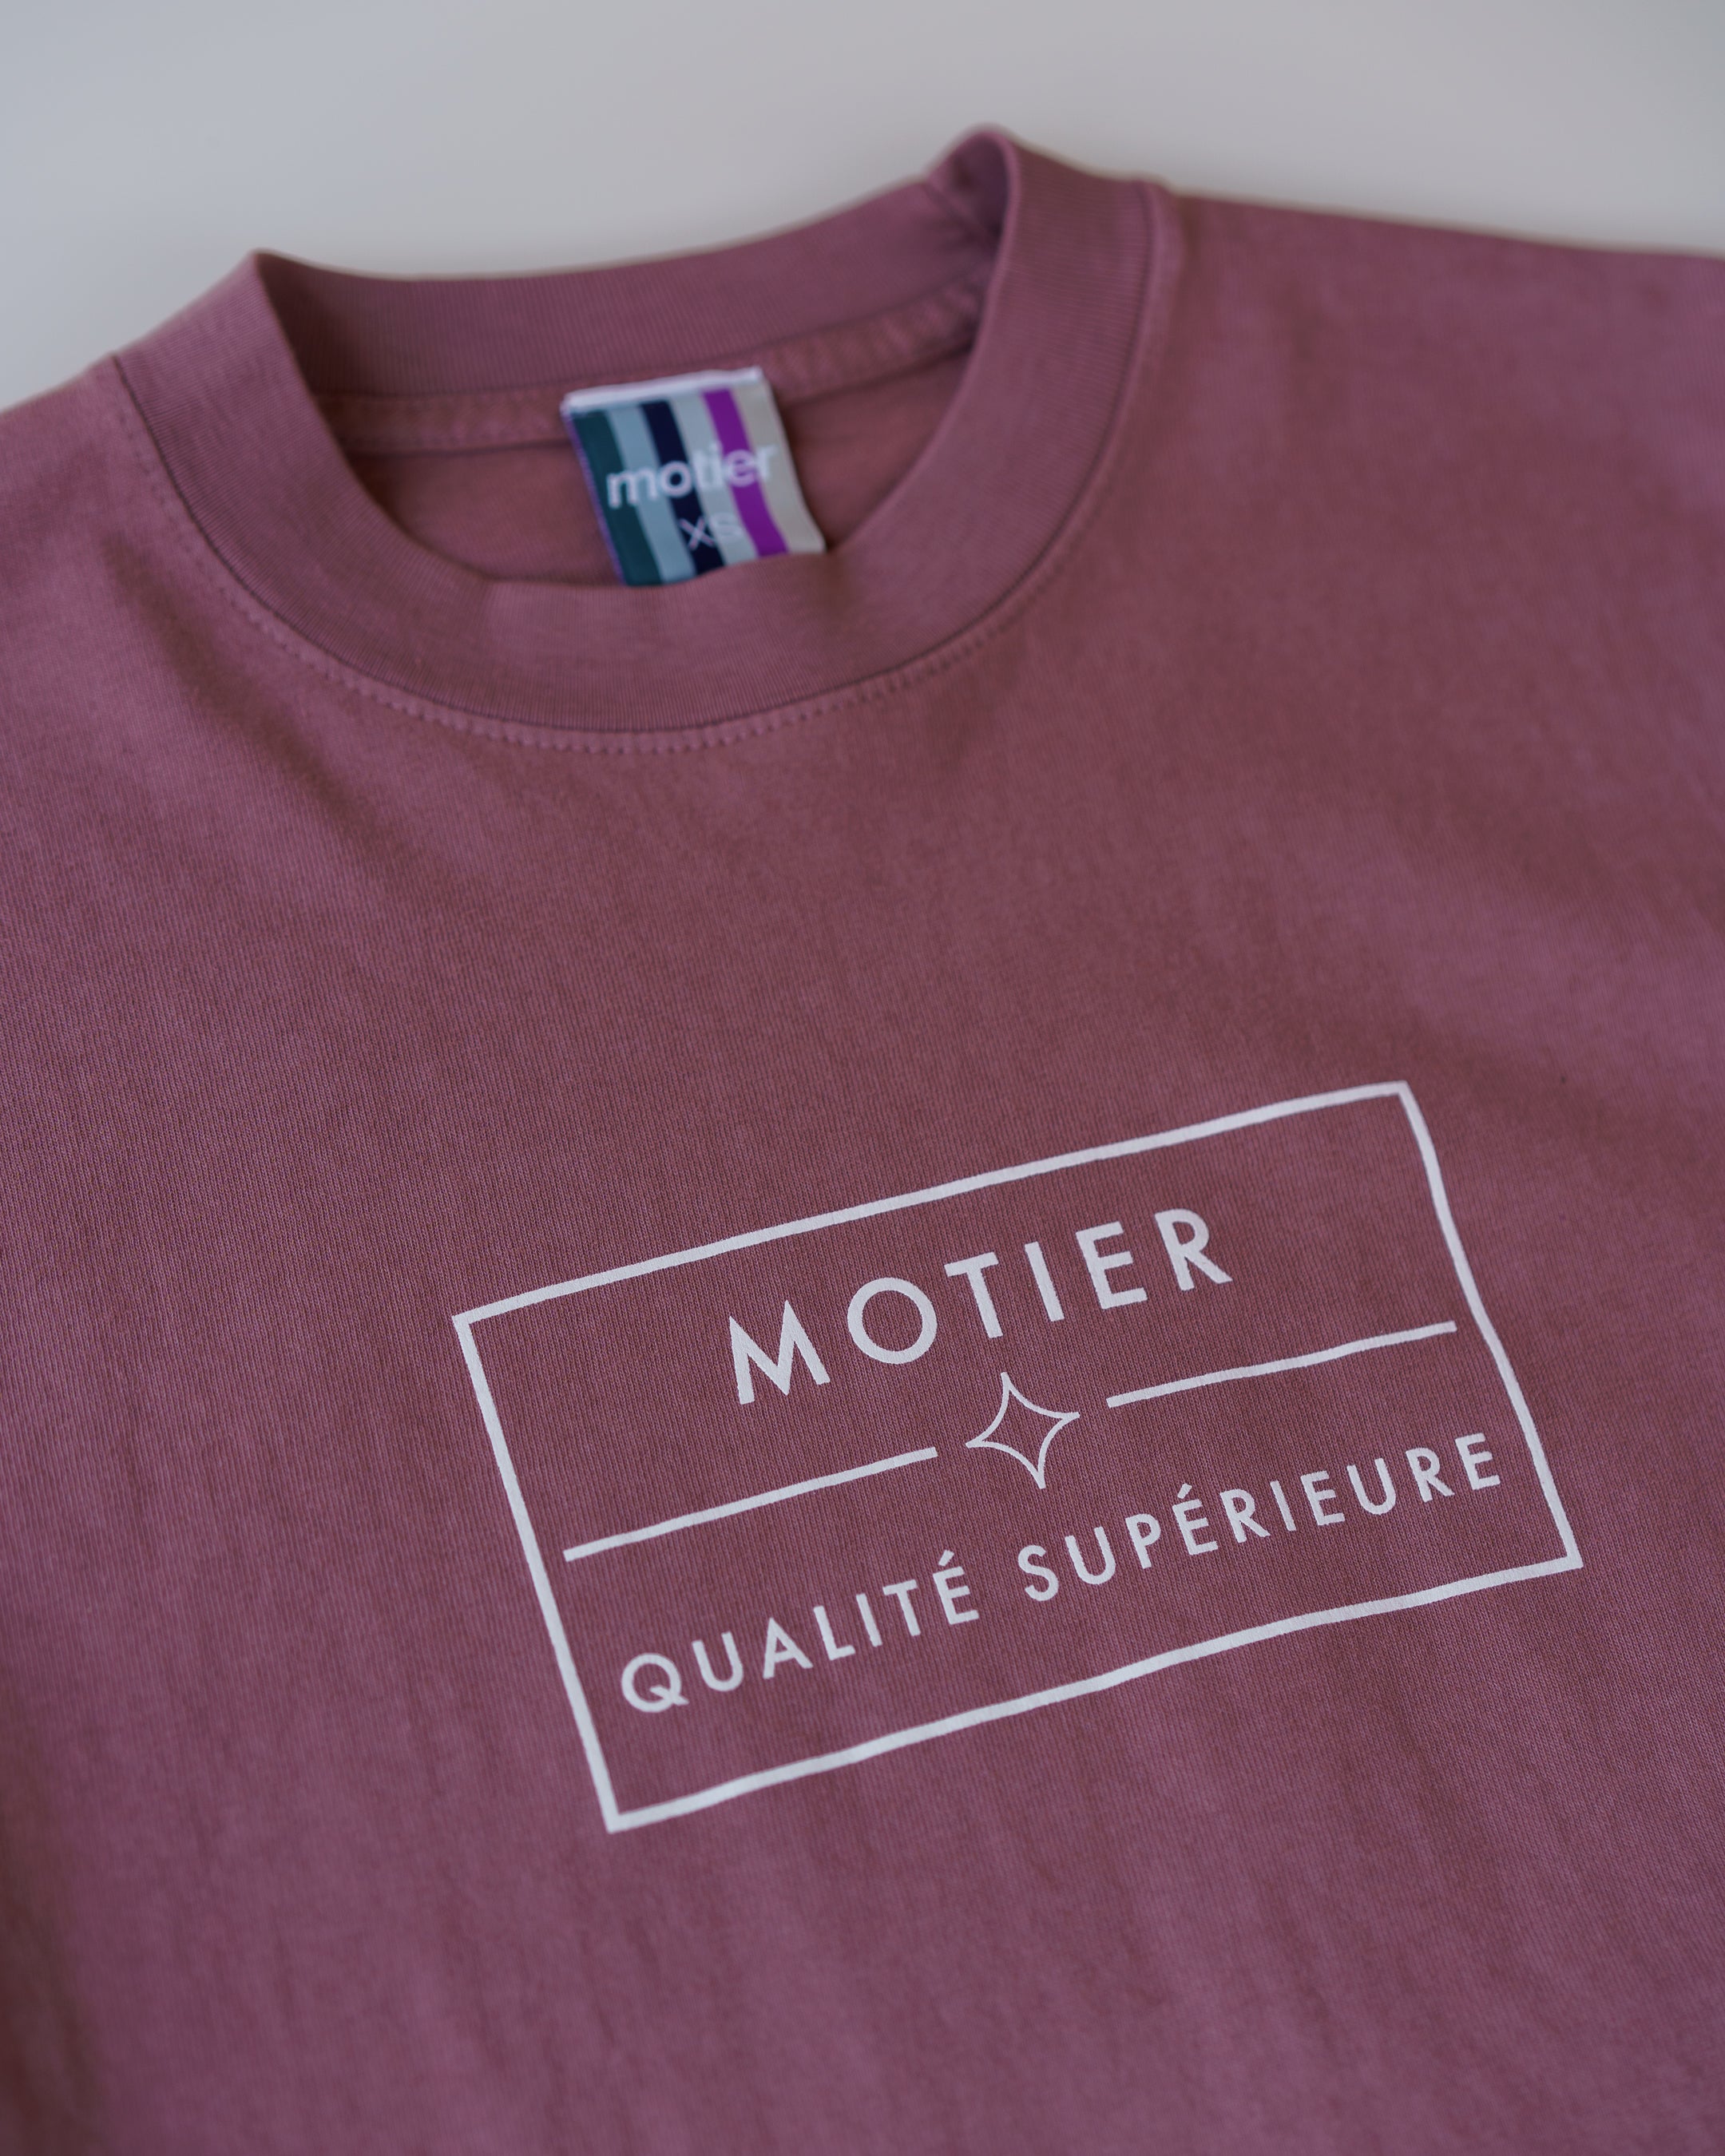 The Qualite Superieure Luxe Tee (Deep Mauve) – Motier Lafayette